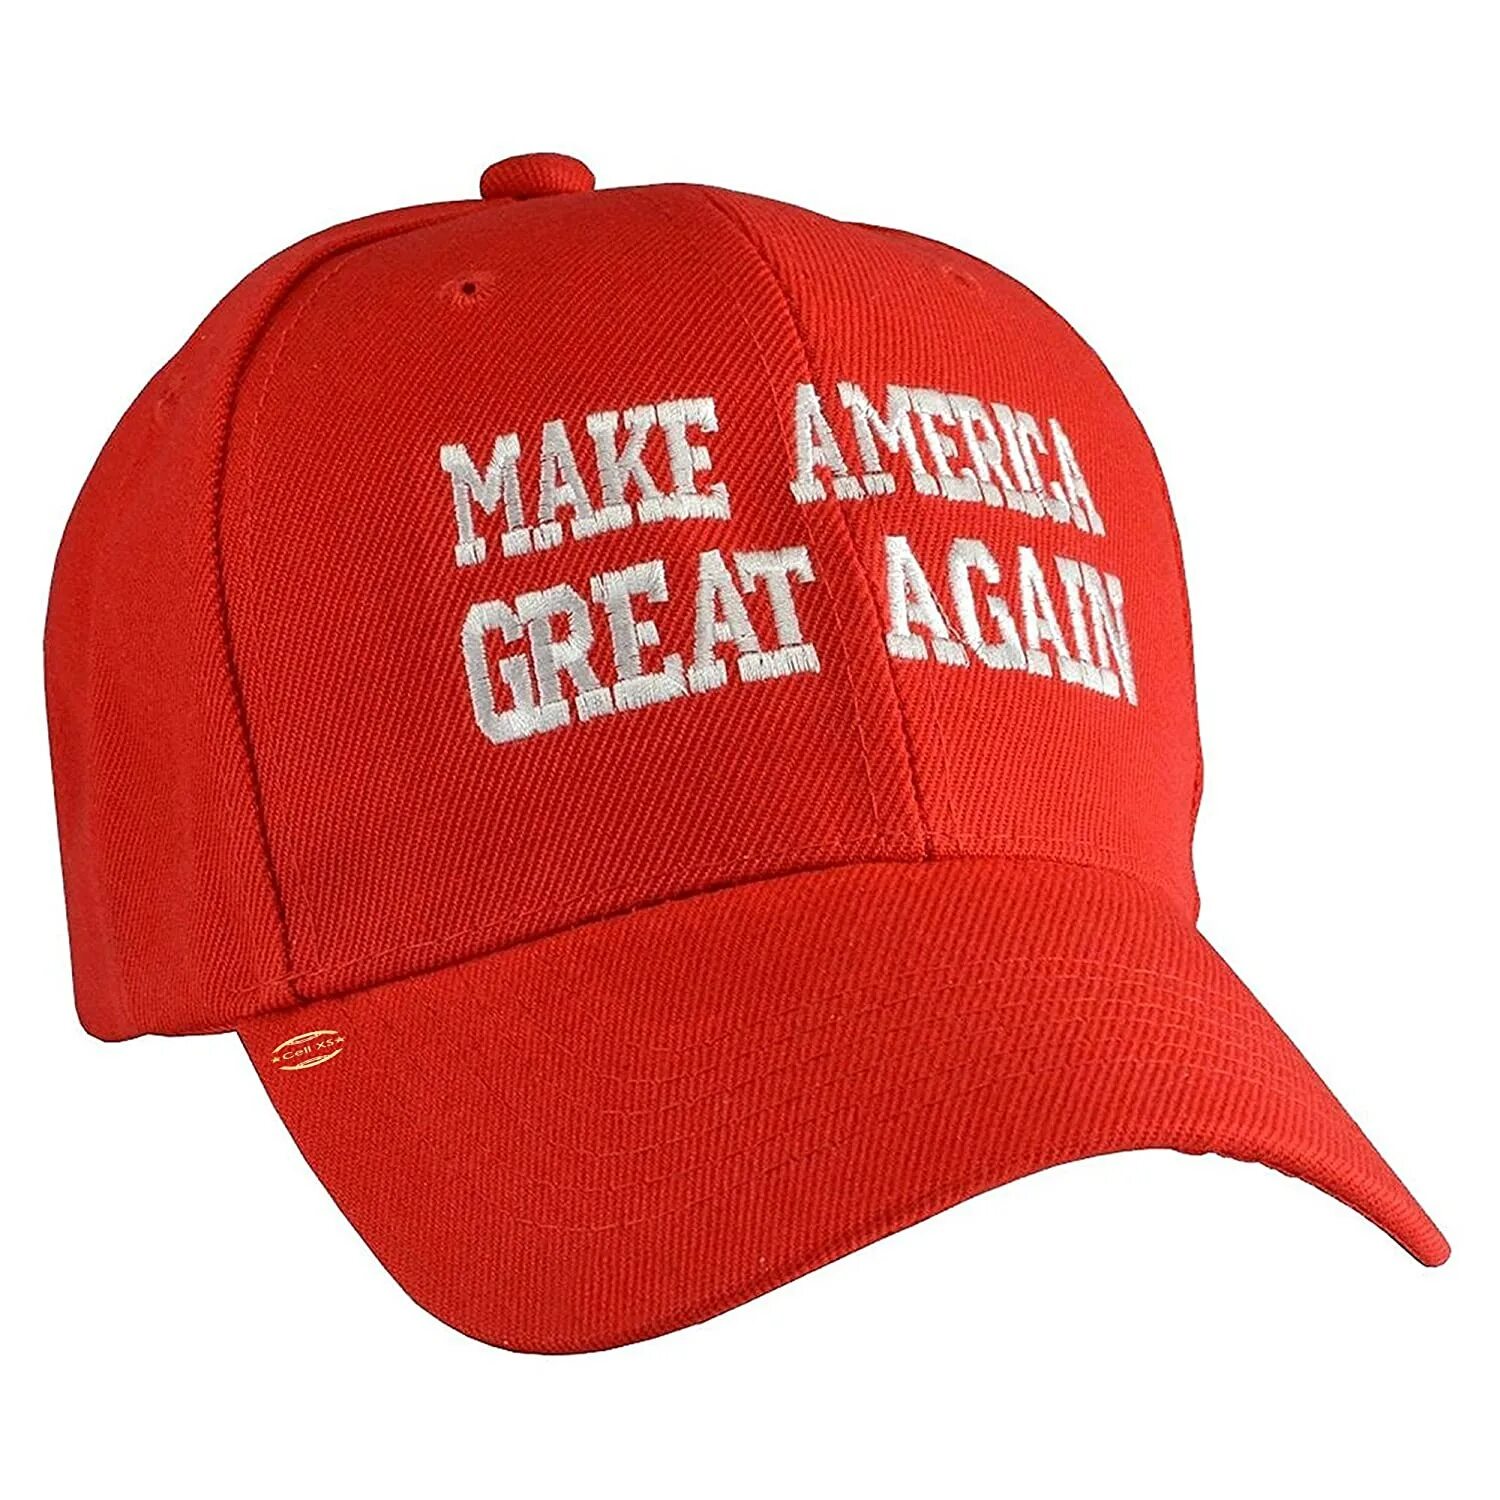 Кепка great America again. Кепка make America great. Кепка Maga Трамп. Красная кепка make America great again.